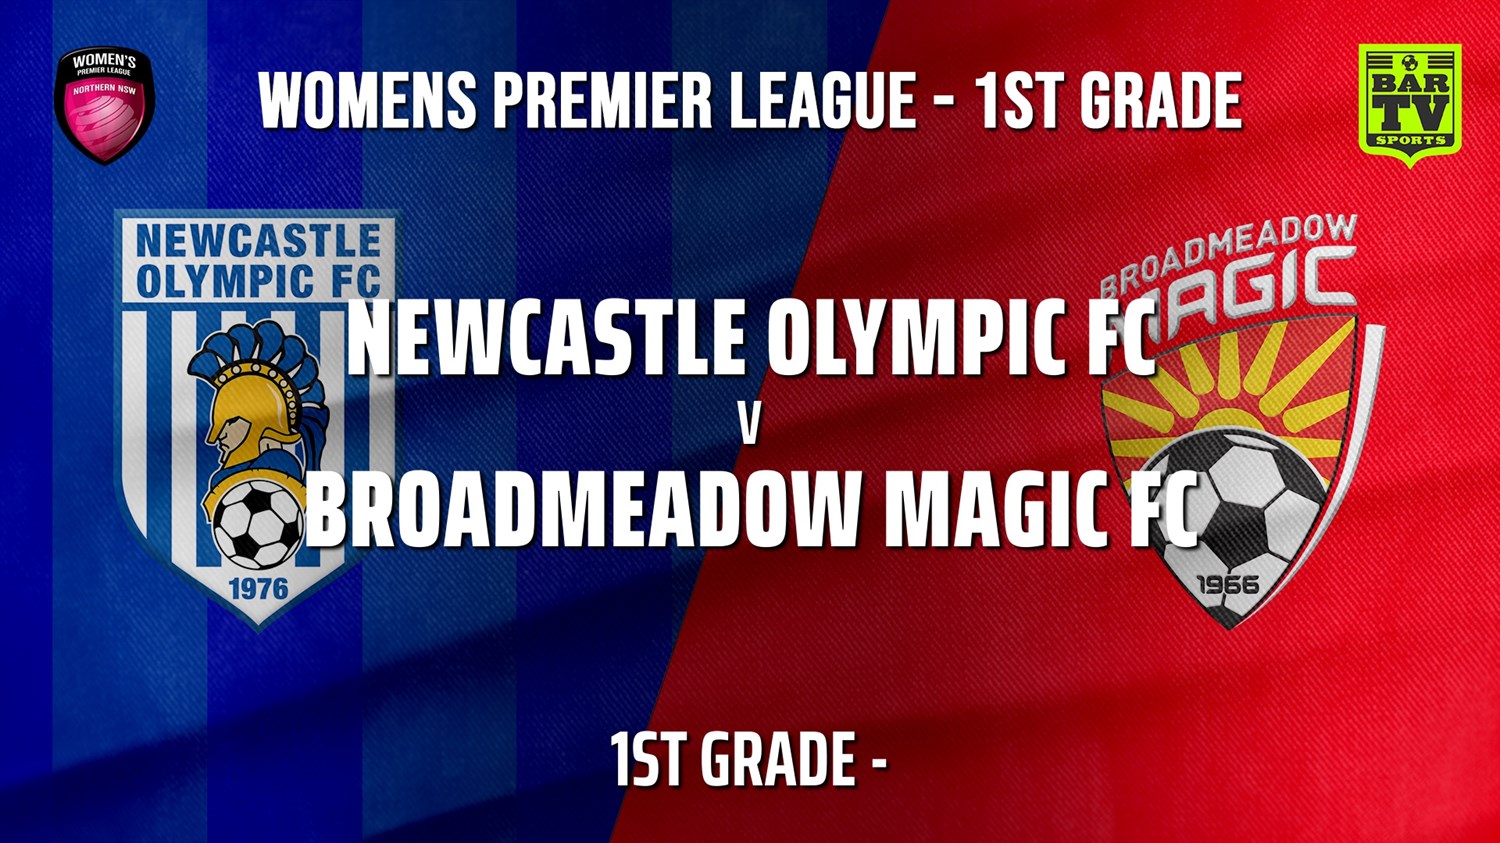 210530-Herald Women’s Premier League 1st Grade - Newcastle Olympic FC (women) v Broadmeadow Magic FC (women) Minigame Slate Image